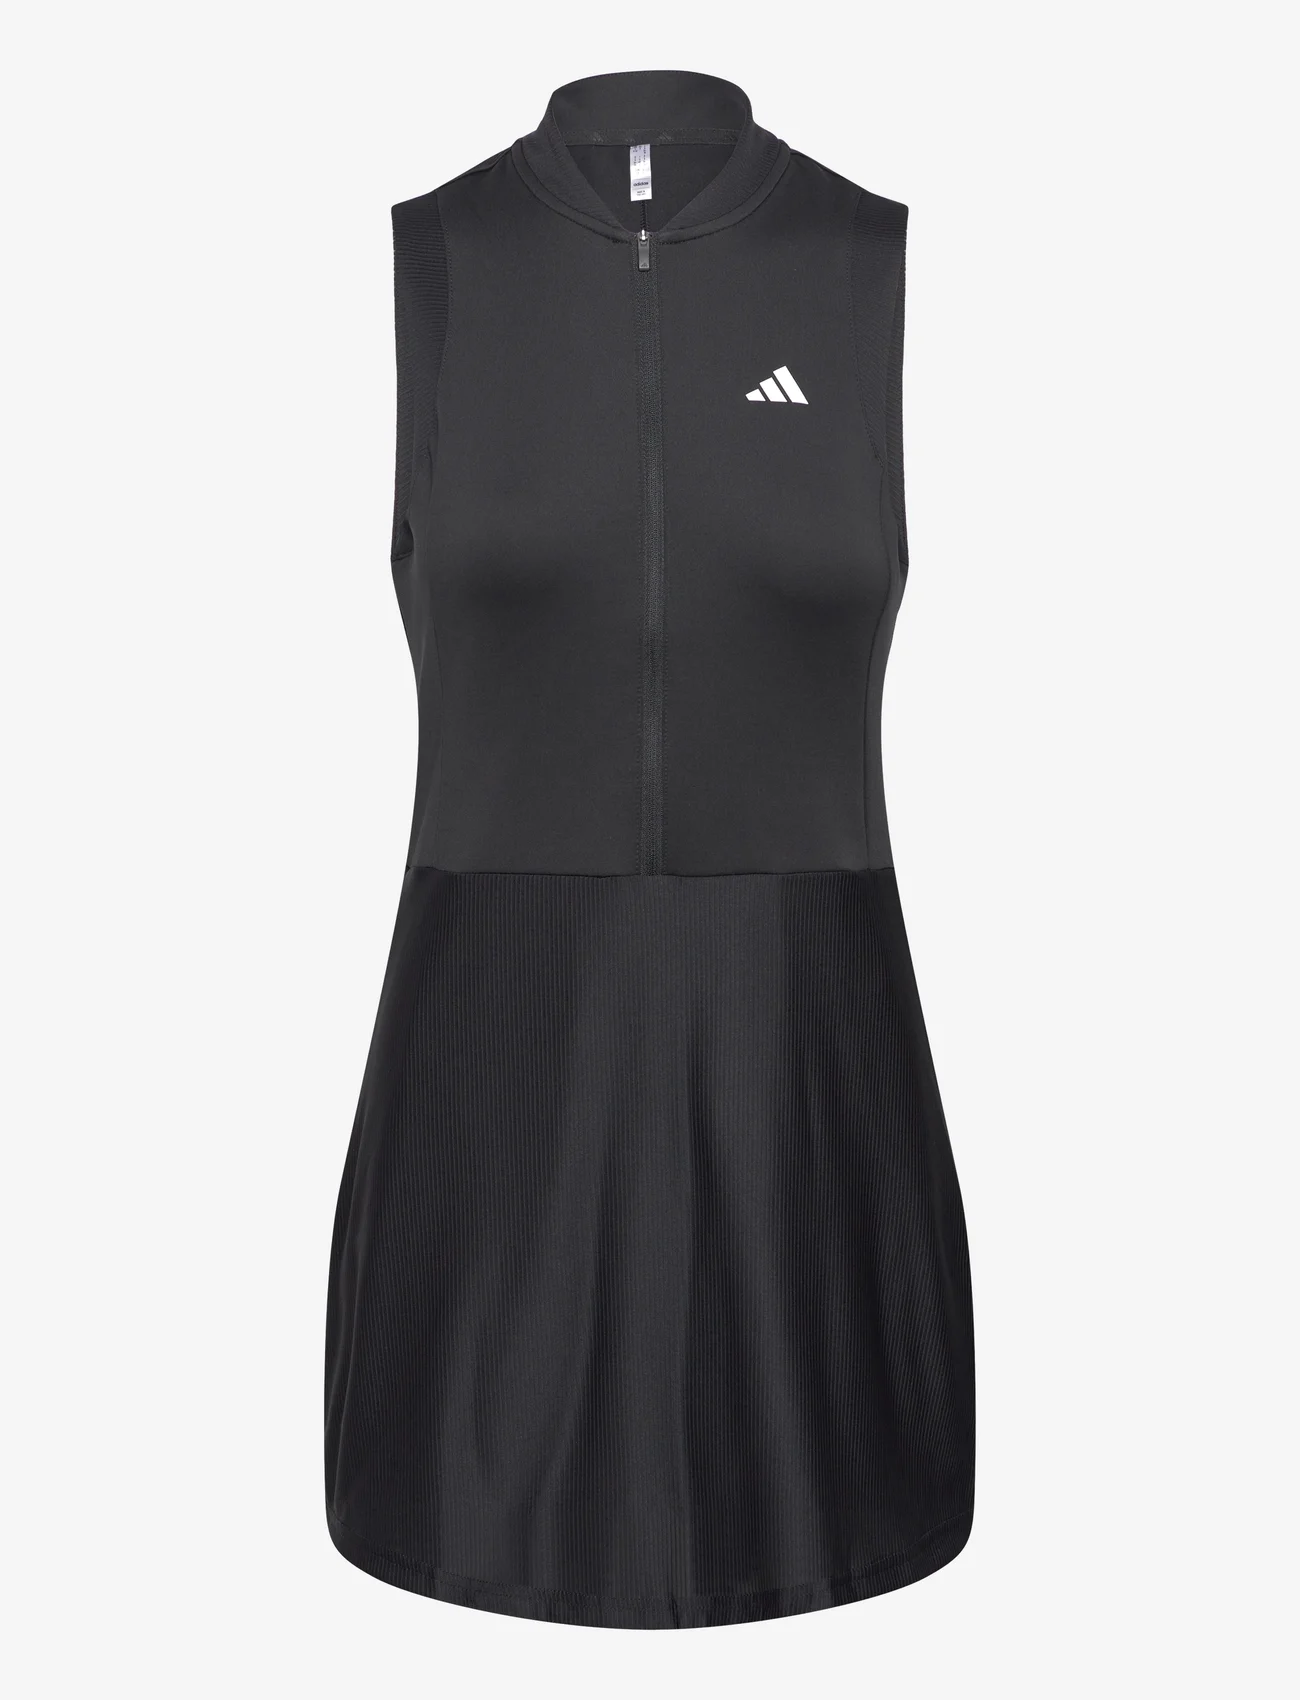 adidas Golf - W ULT C SL DRS - sportklänningar - black - 0